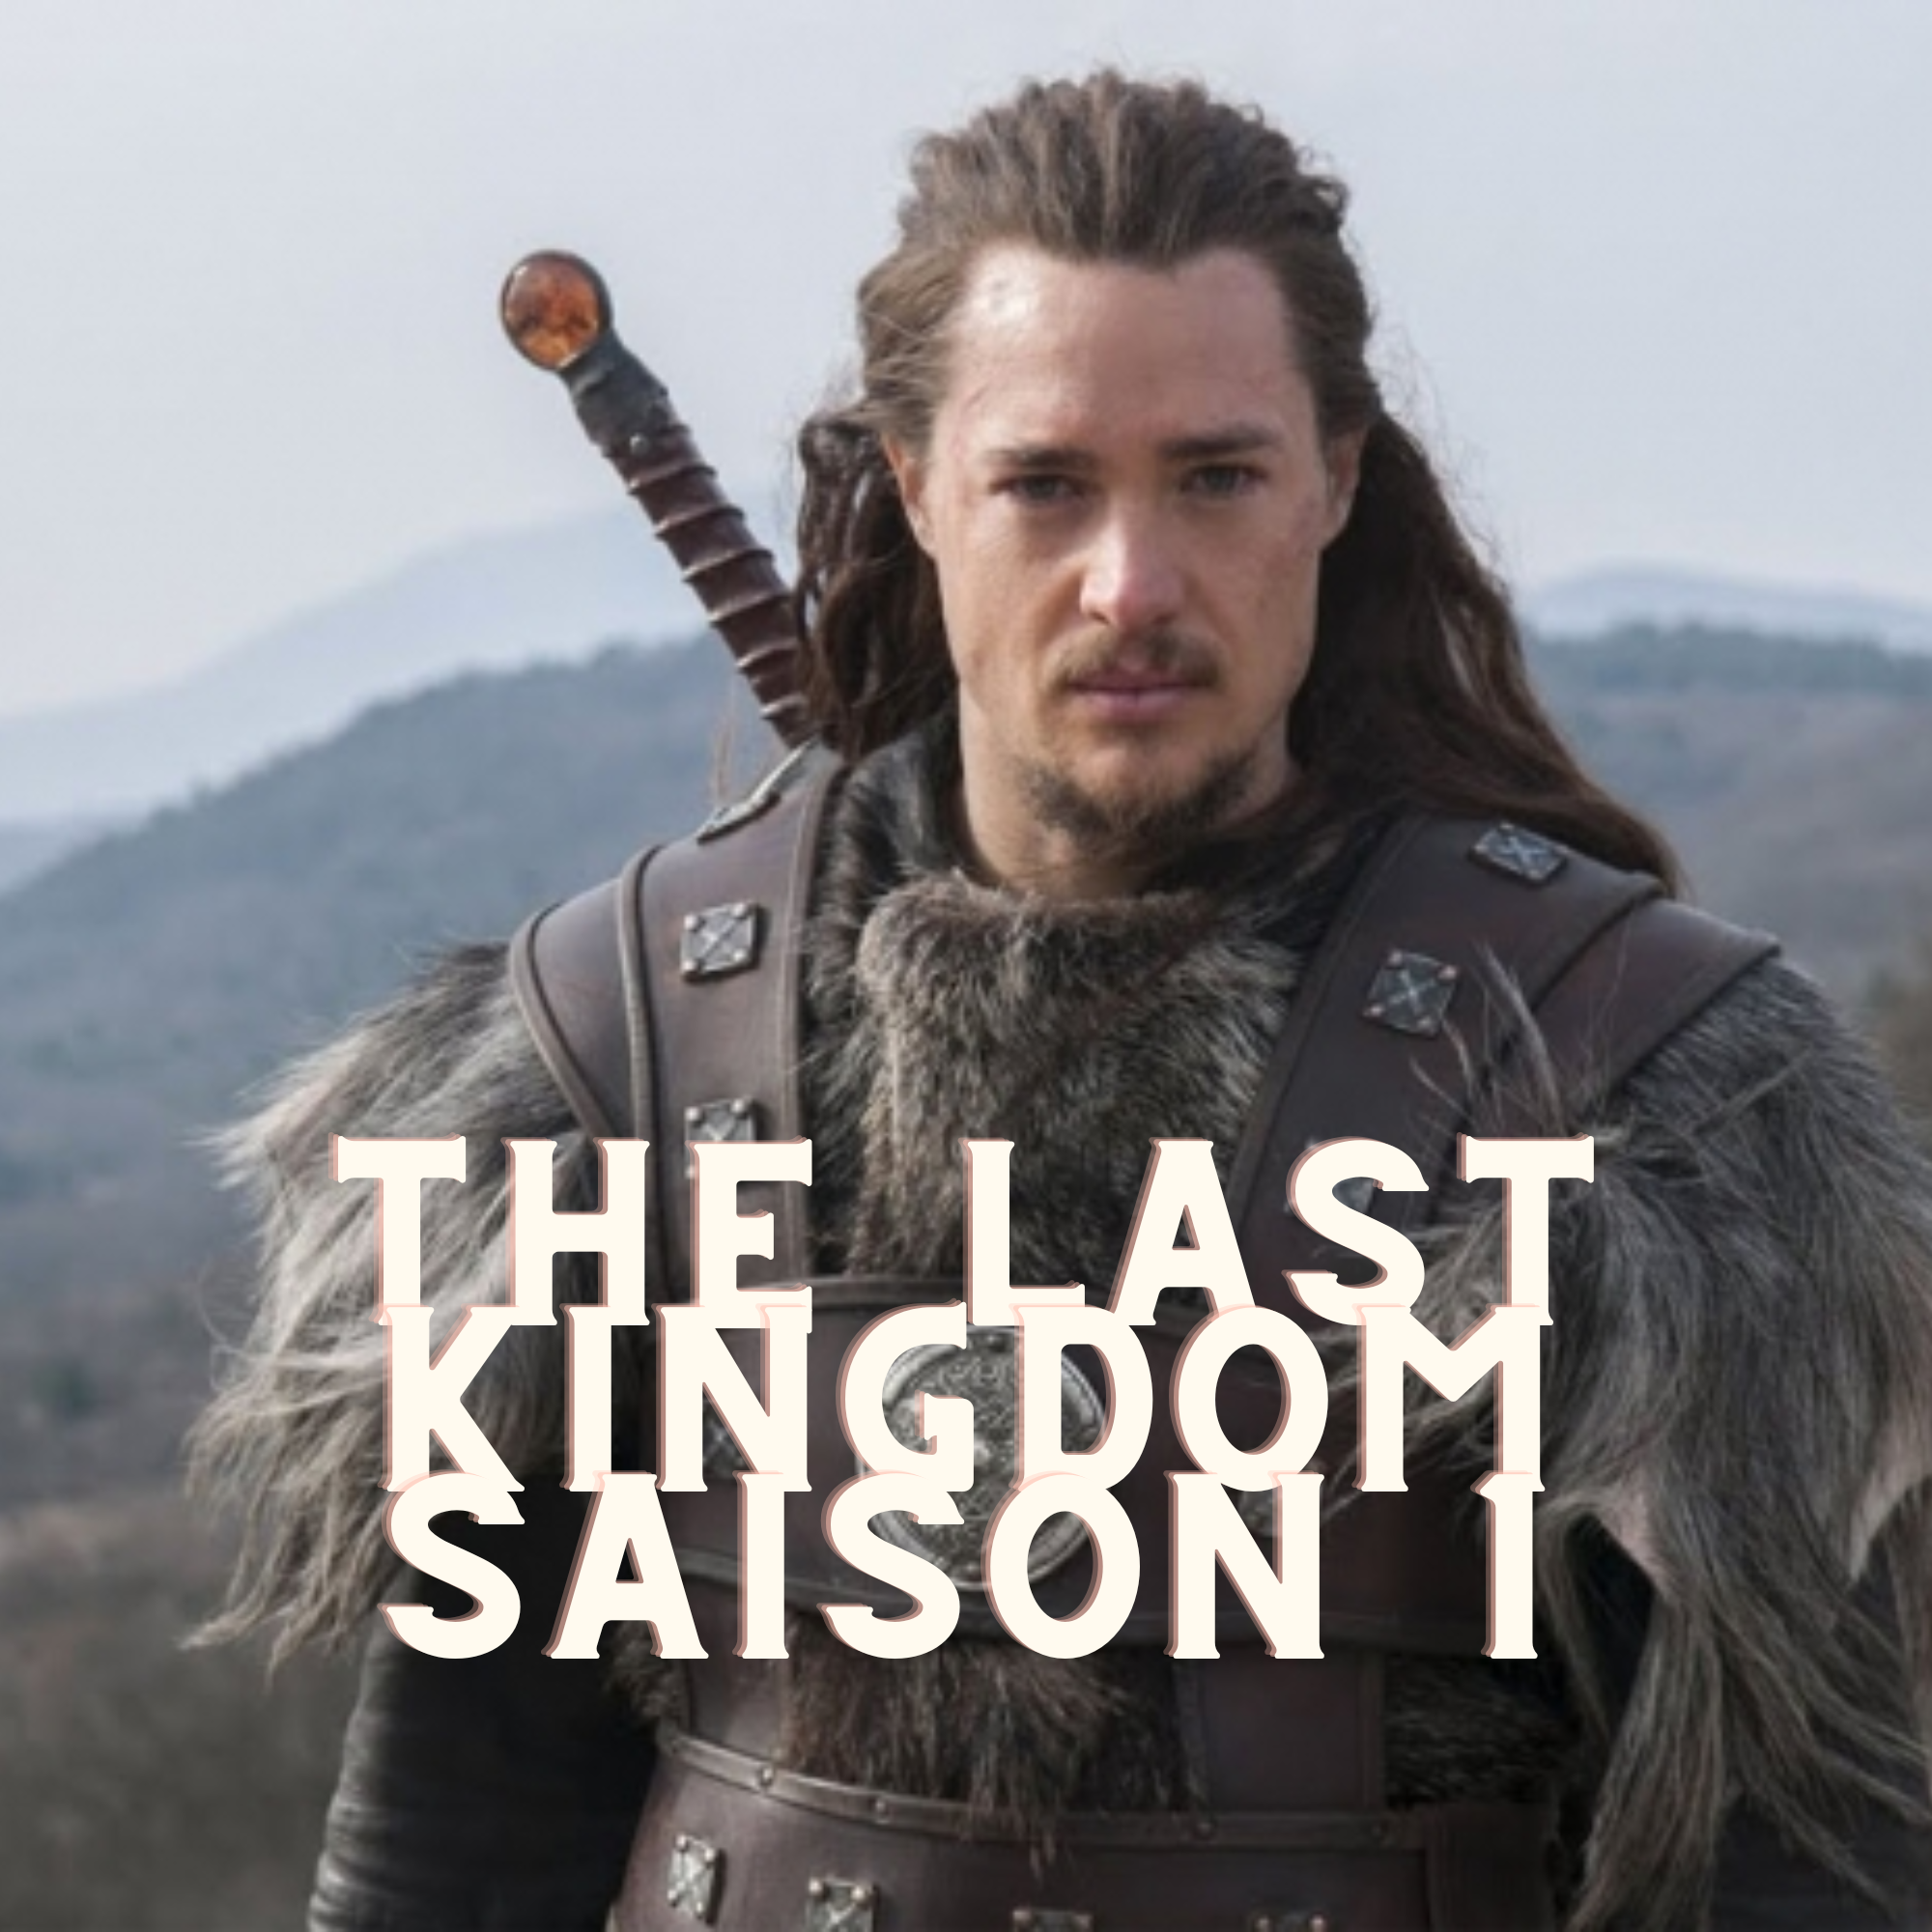 The Last Kingdom Saison 1